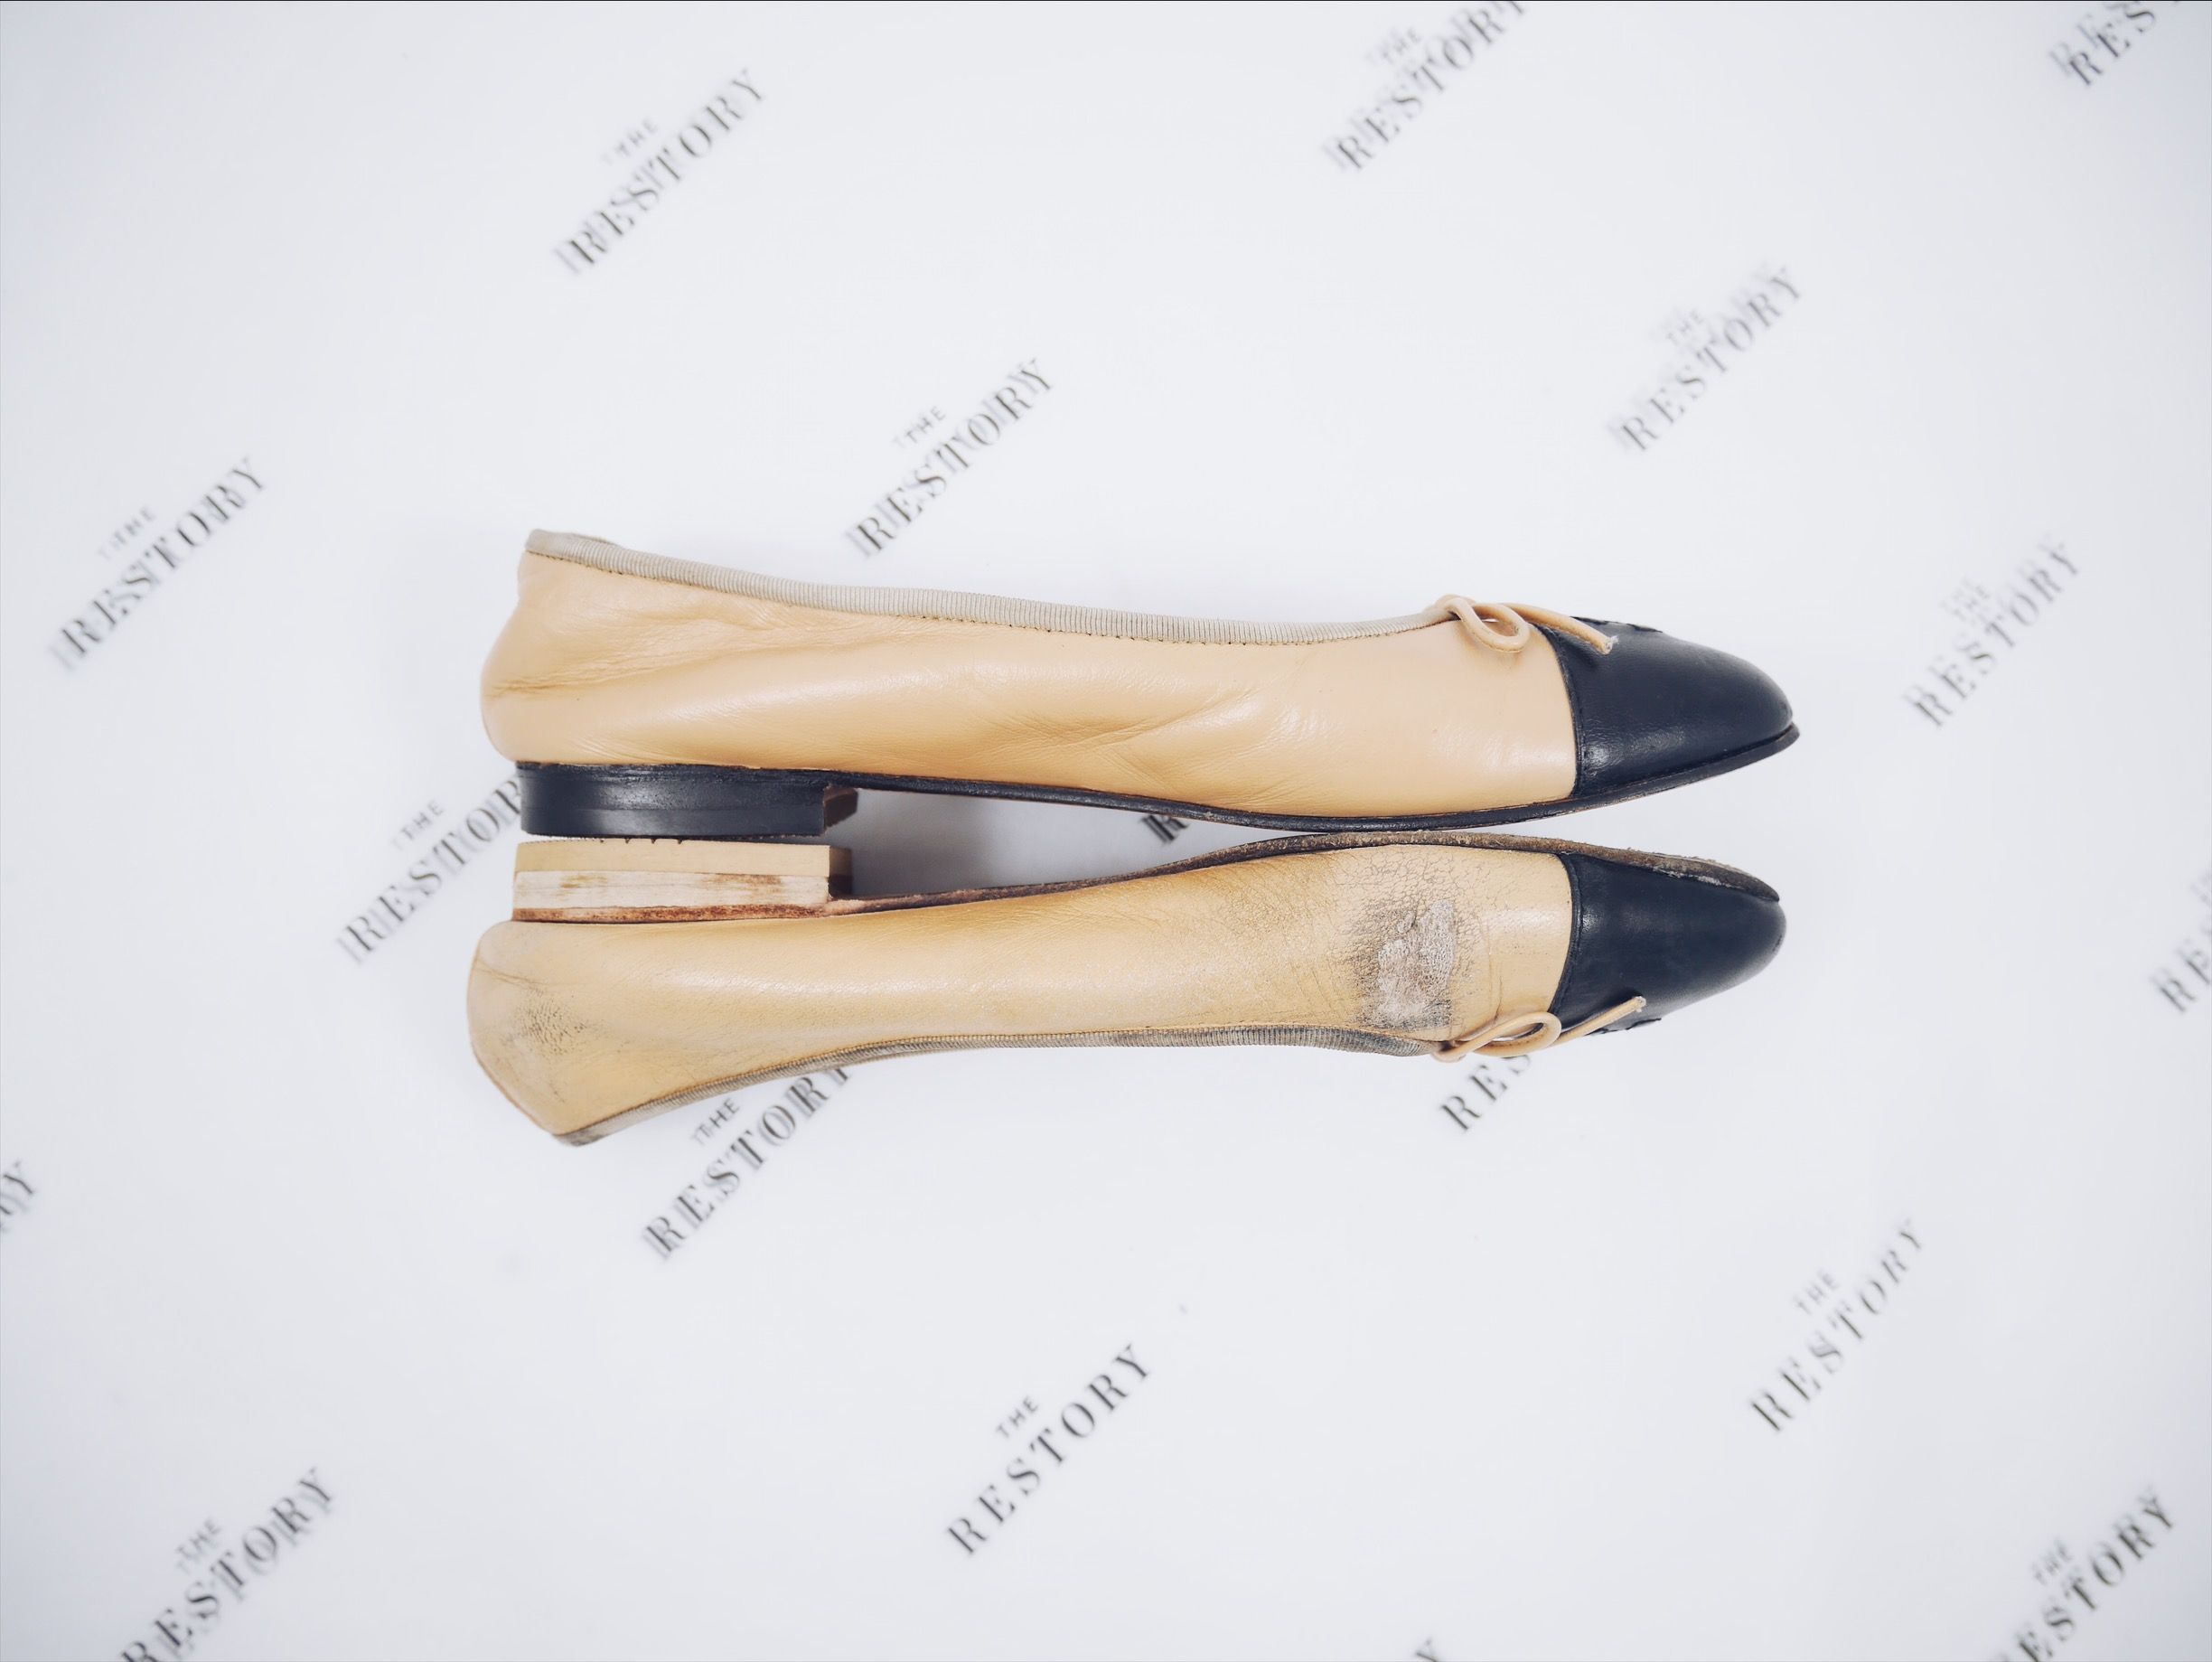 Luxury Shoe Repair - Chanel Ballet Flats - The Restory